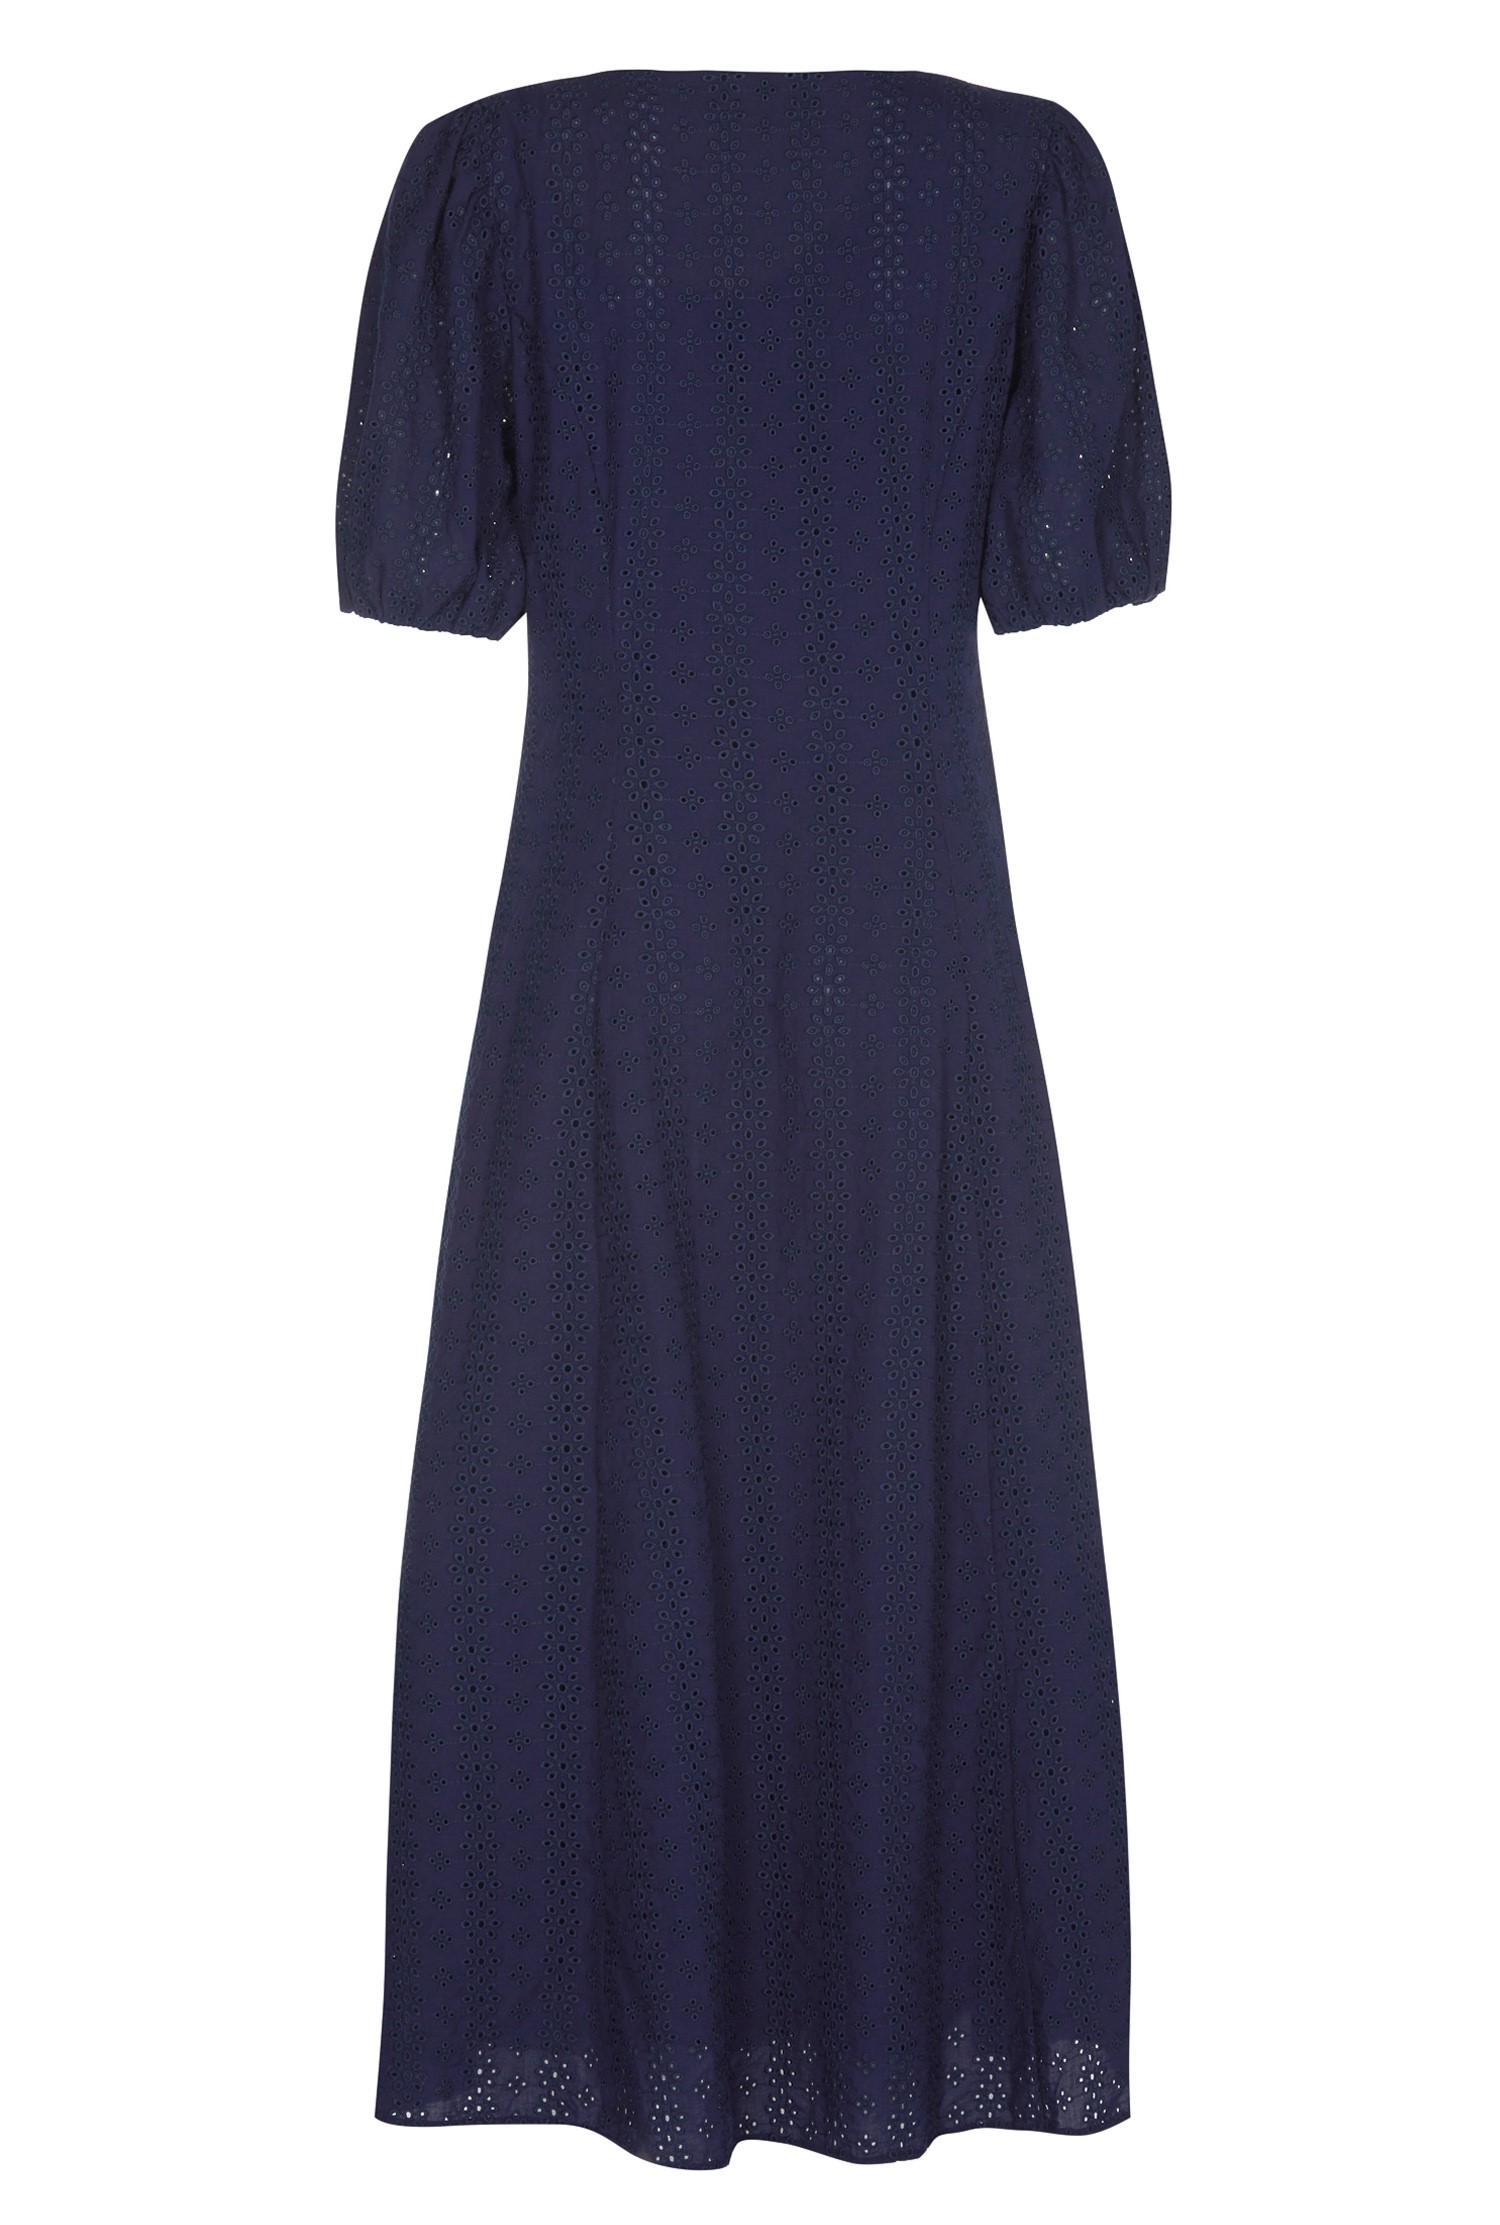 Zahara dress | Ghost.co.uk